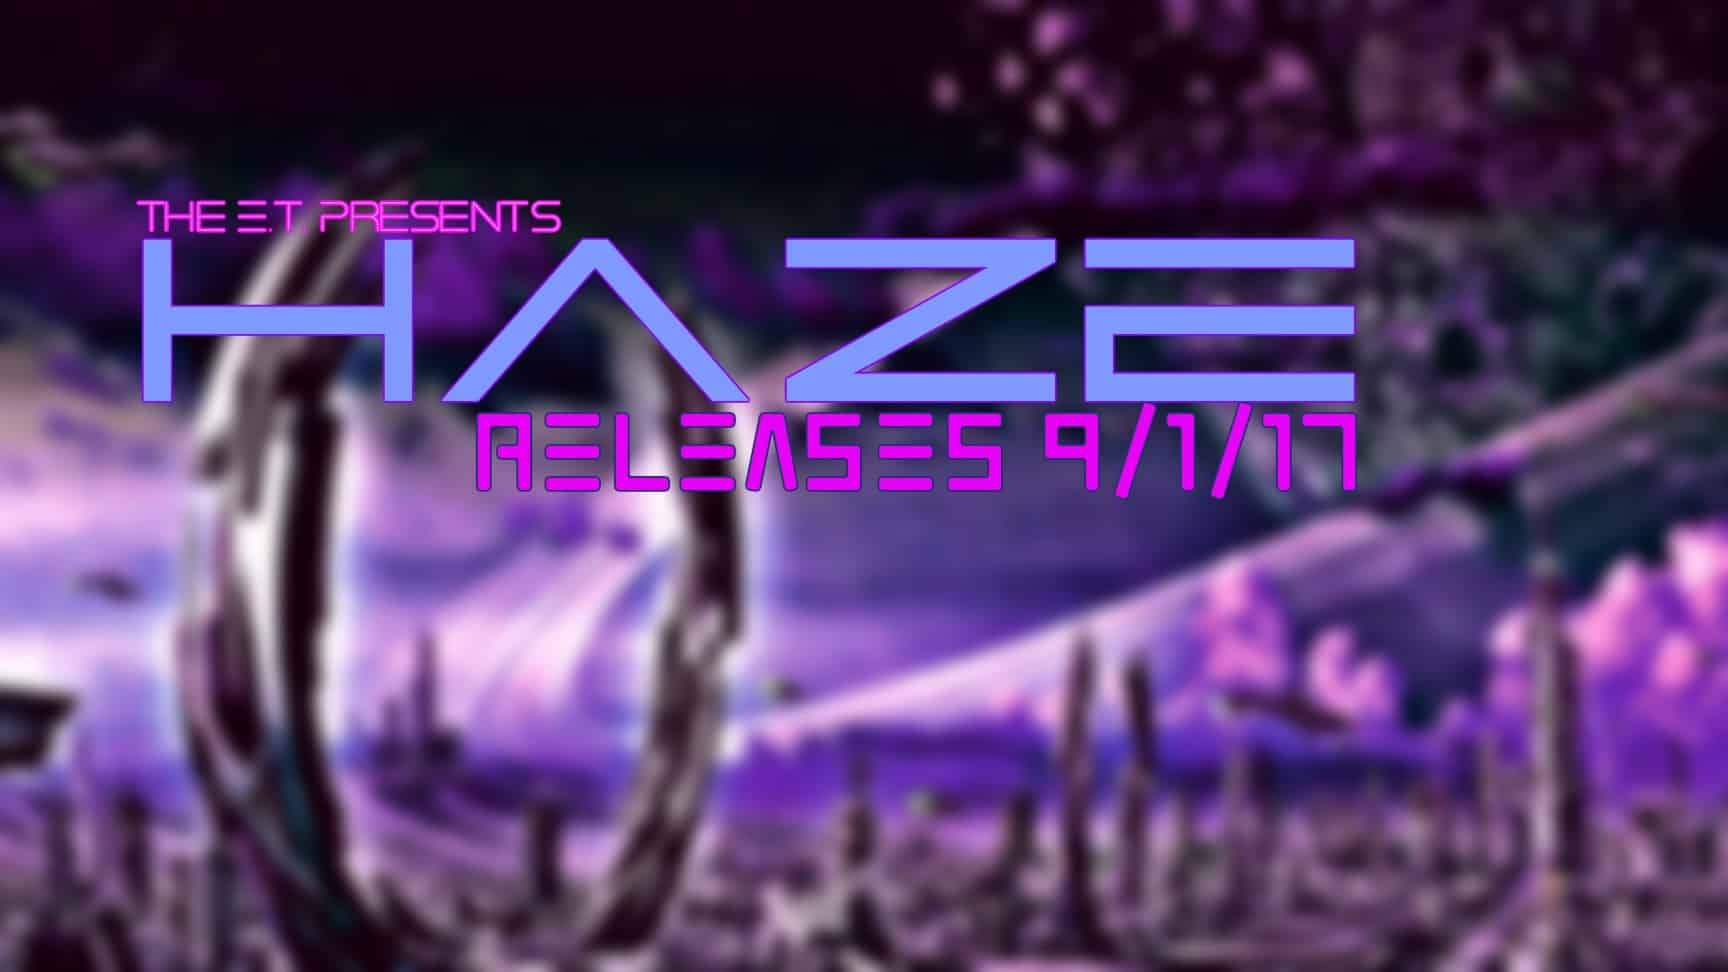 Haze EP Releases 9/1/17